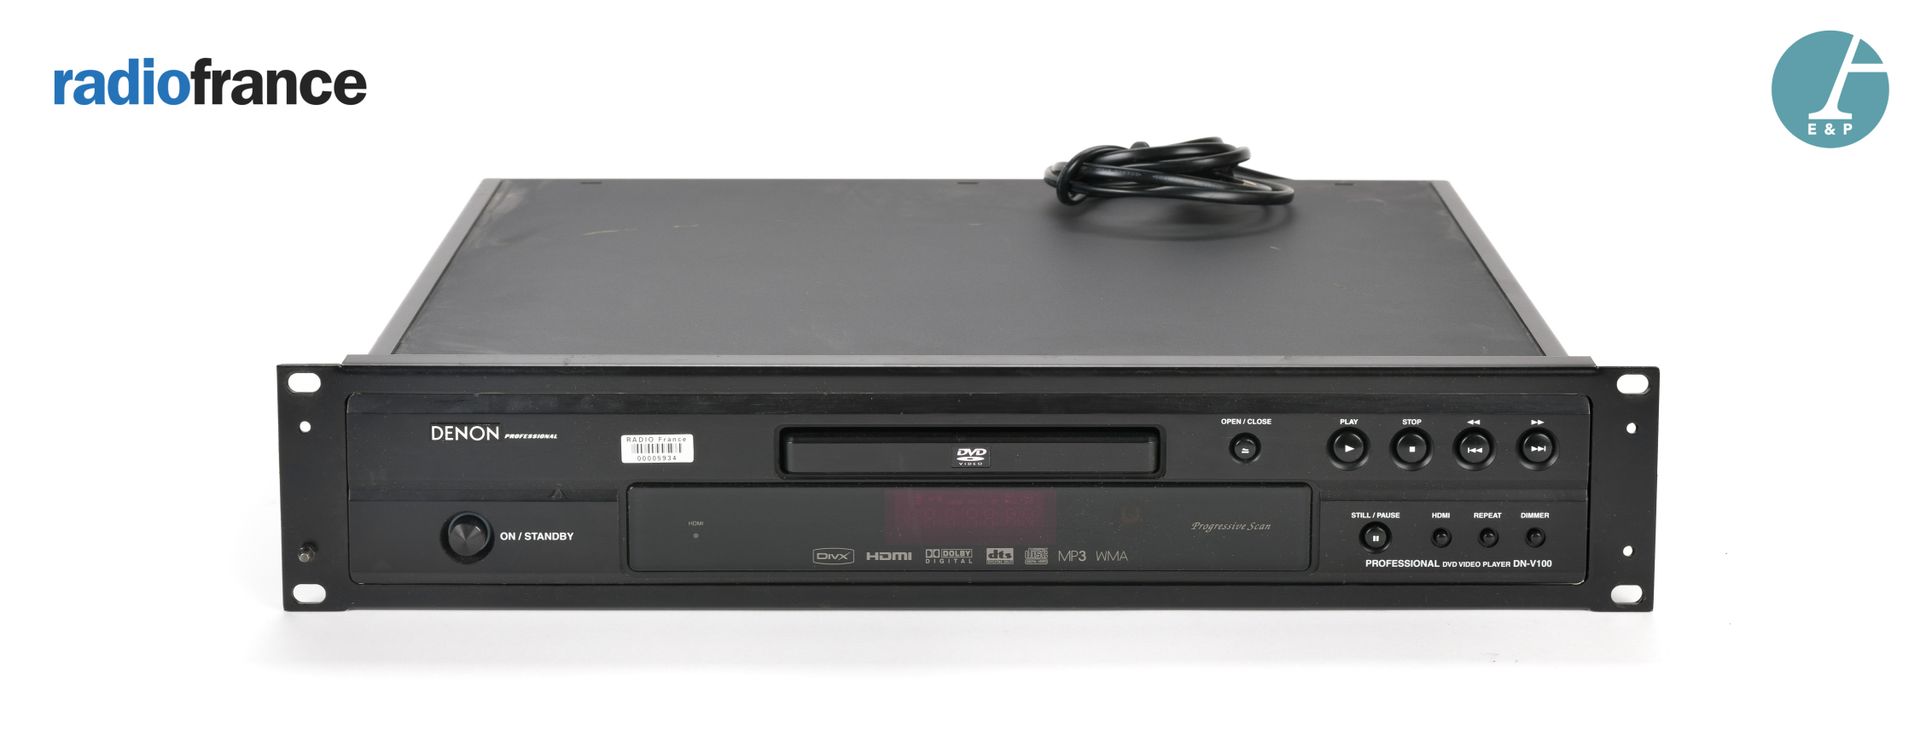 Null DENON专业 - DVD视频播放器DN-V100

高：9厘米 - 宽：48厘米 - 深：31厘米

有一个遥控器。

翻新的设备，使用过的状态，操&hellip;